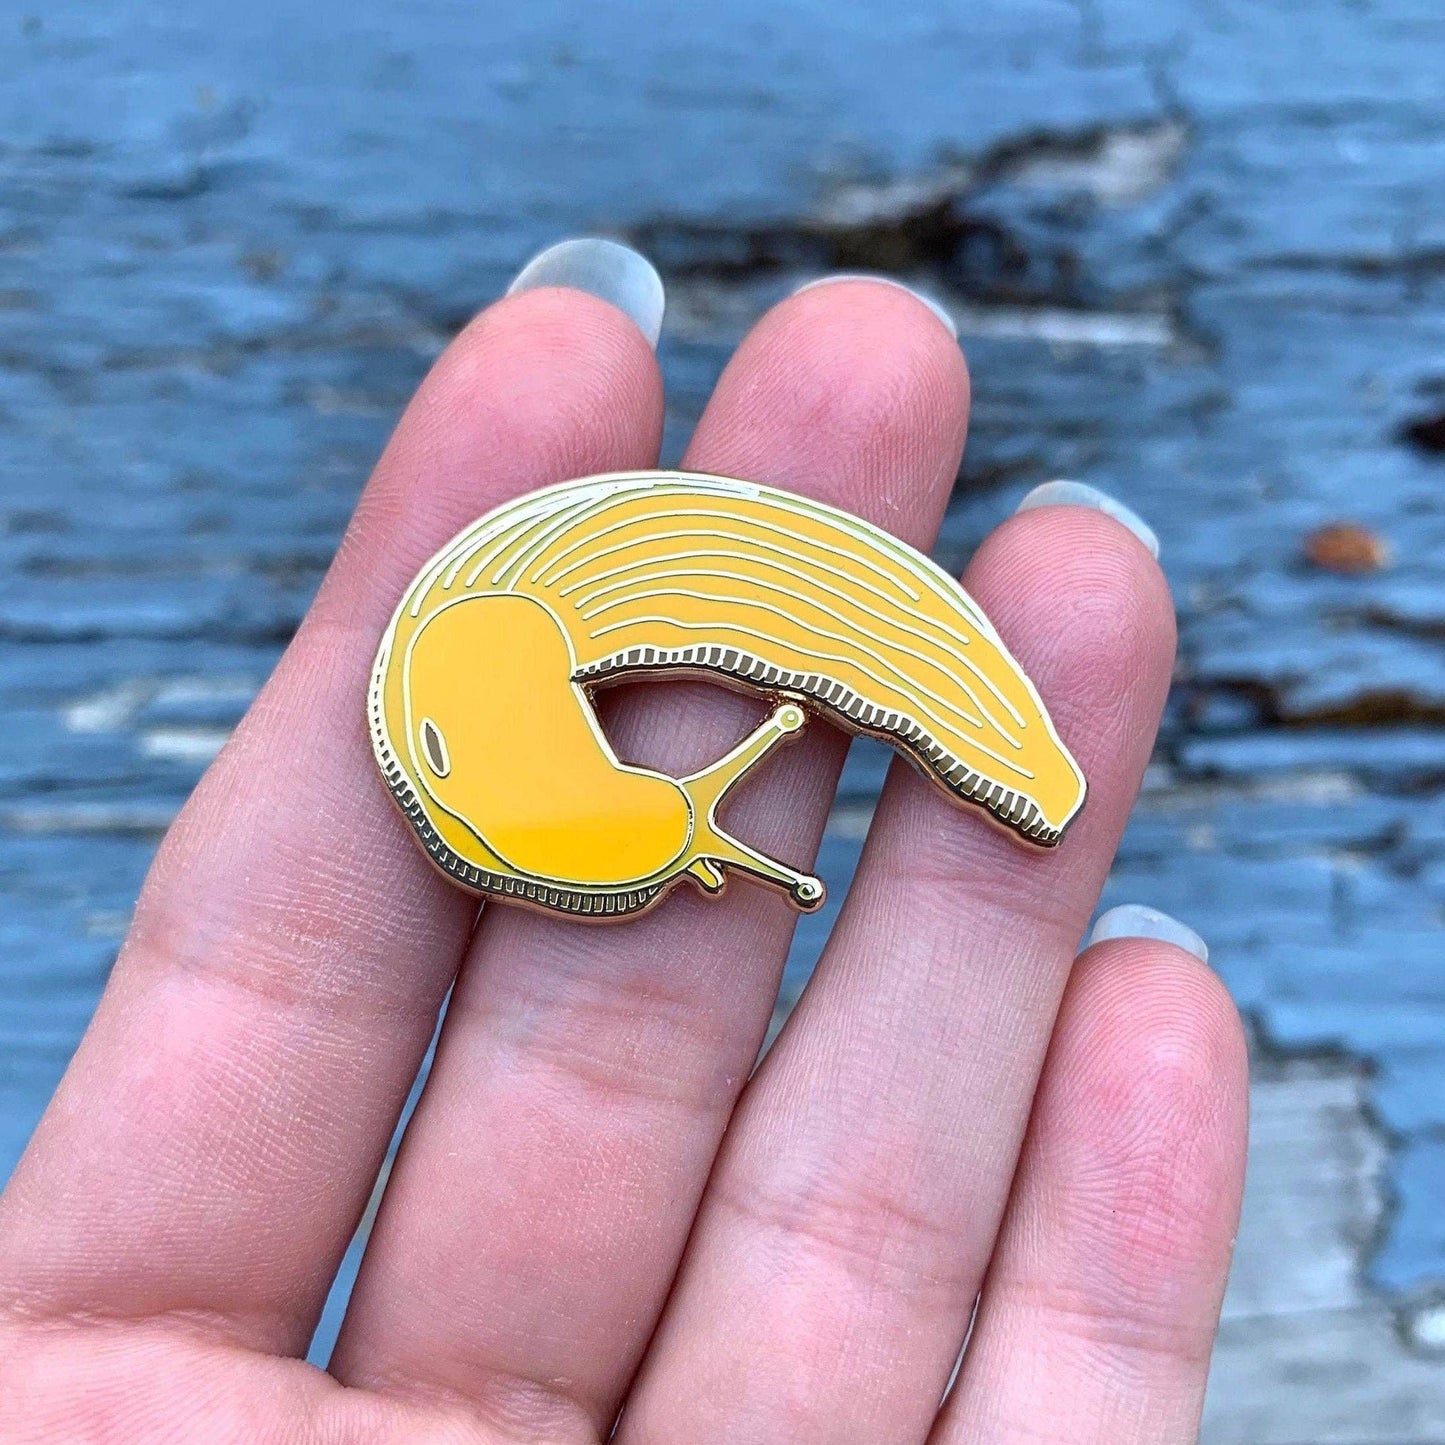 California Banana Slug Pin